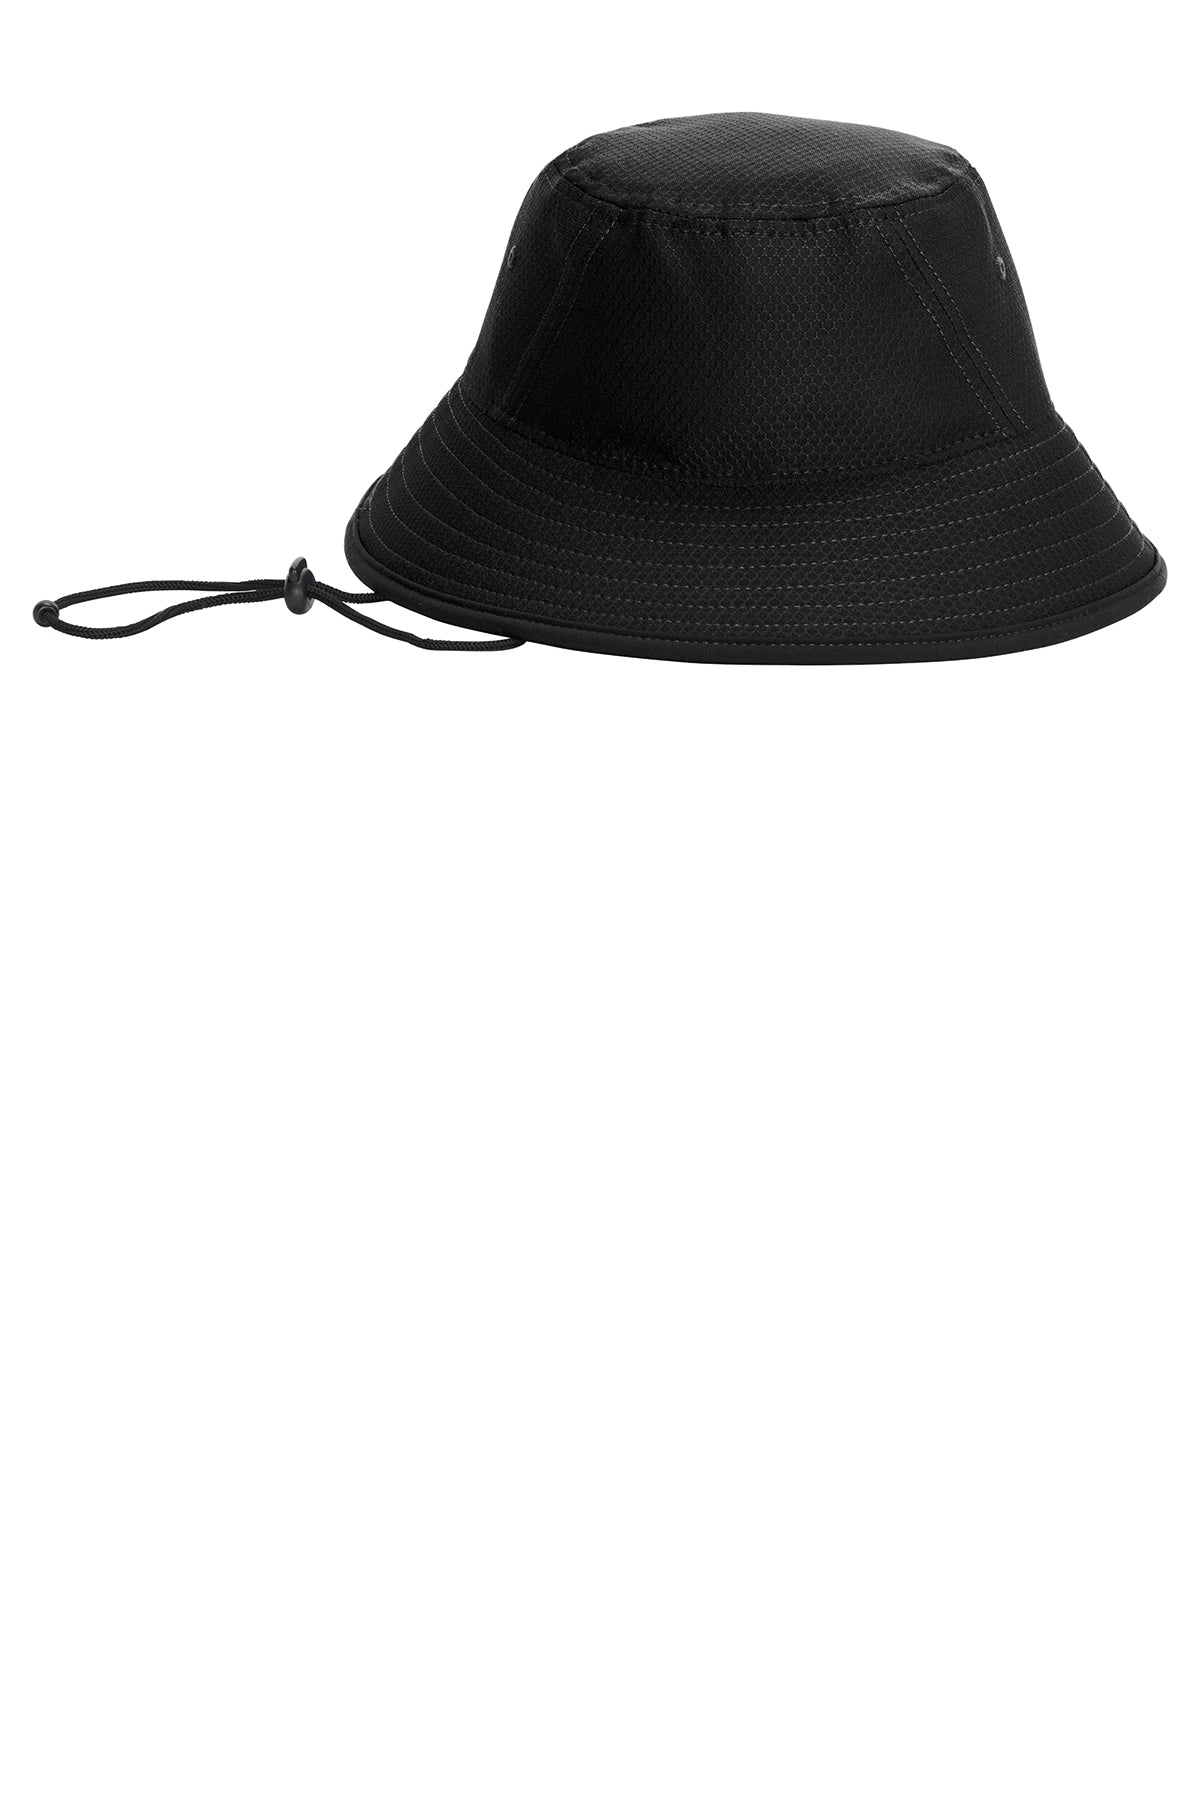 New Era Hex Era Branded Bucket Hats, Black